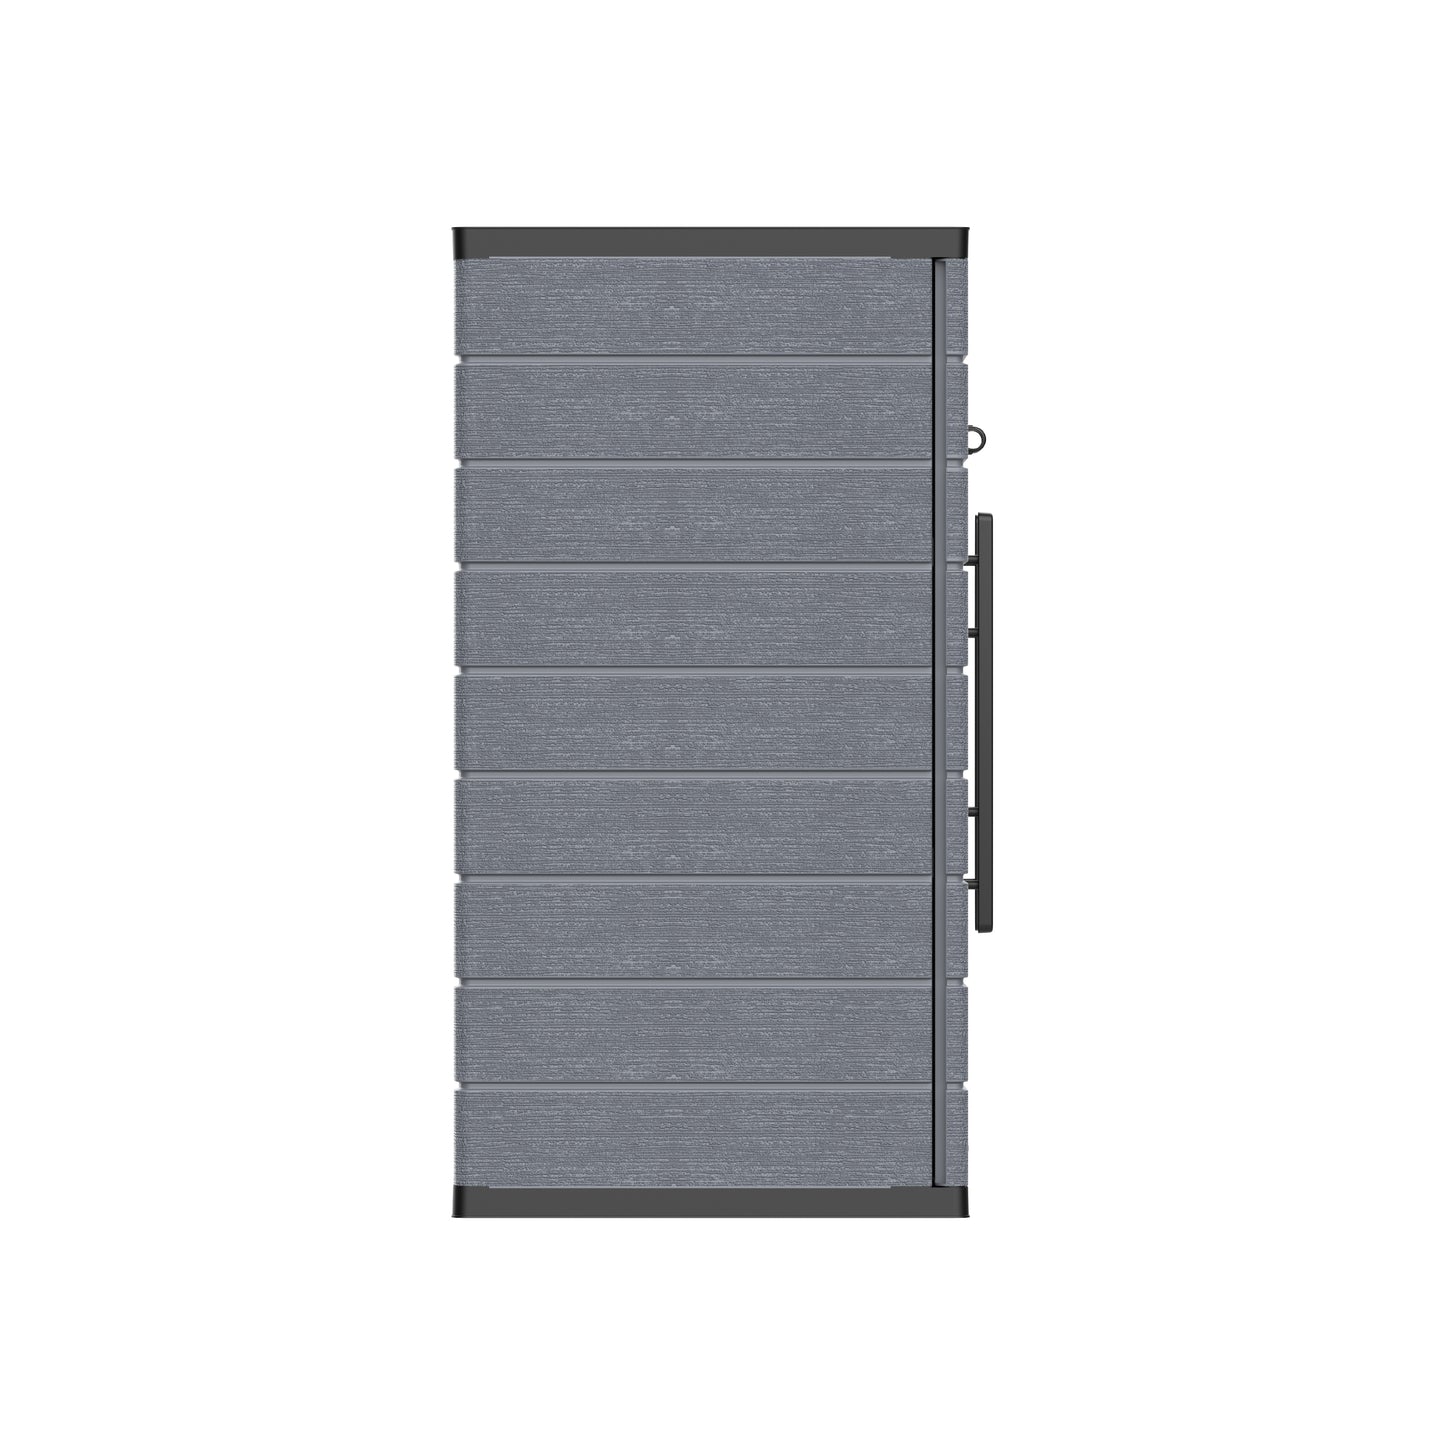 Cosmoplast UAE Cedargrain Vertical Storage Short Cabinet